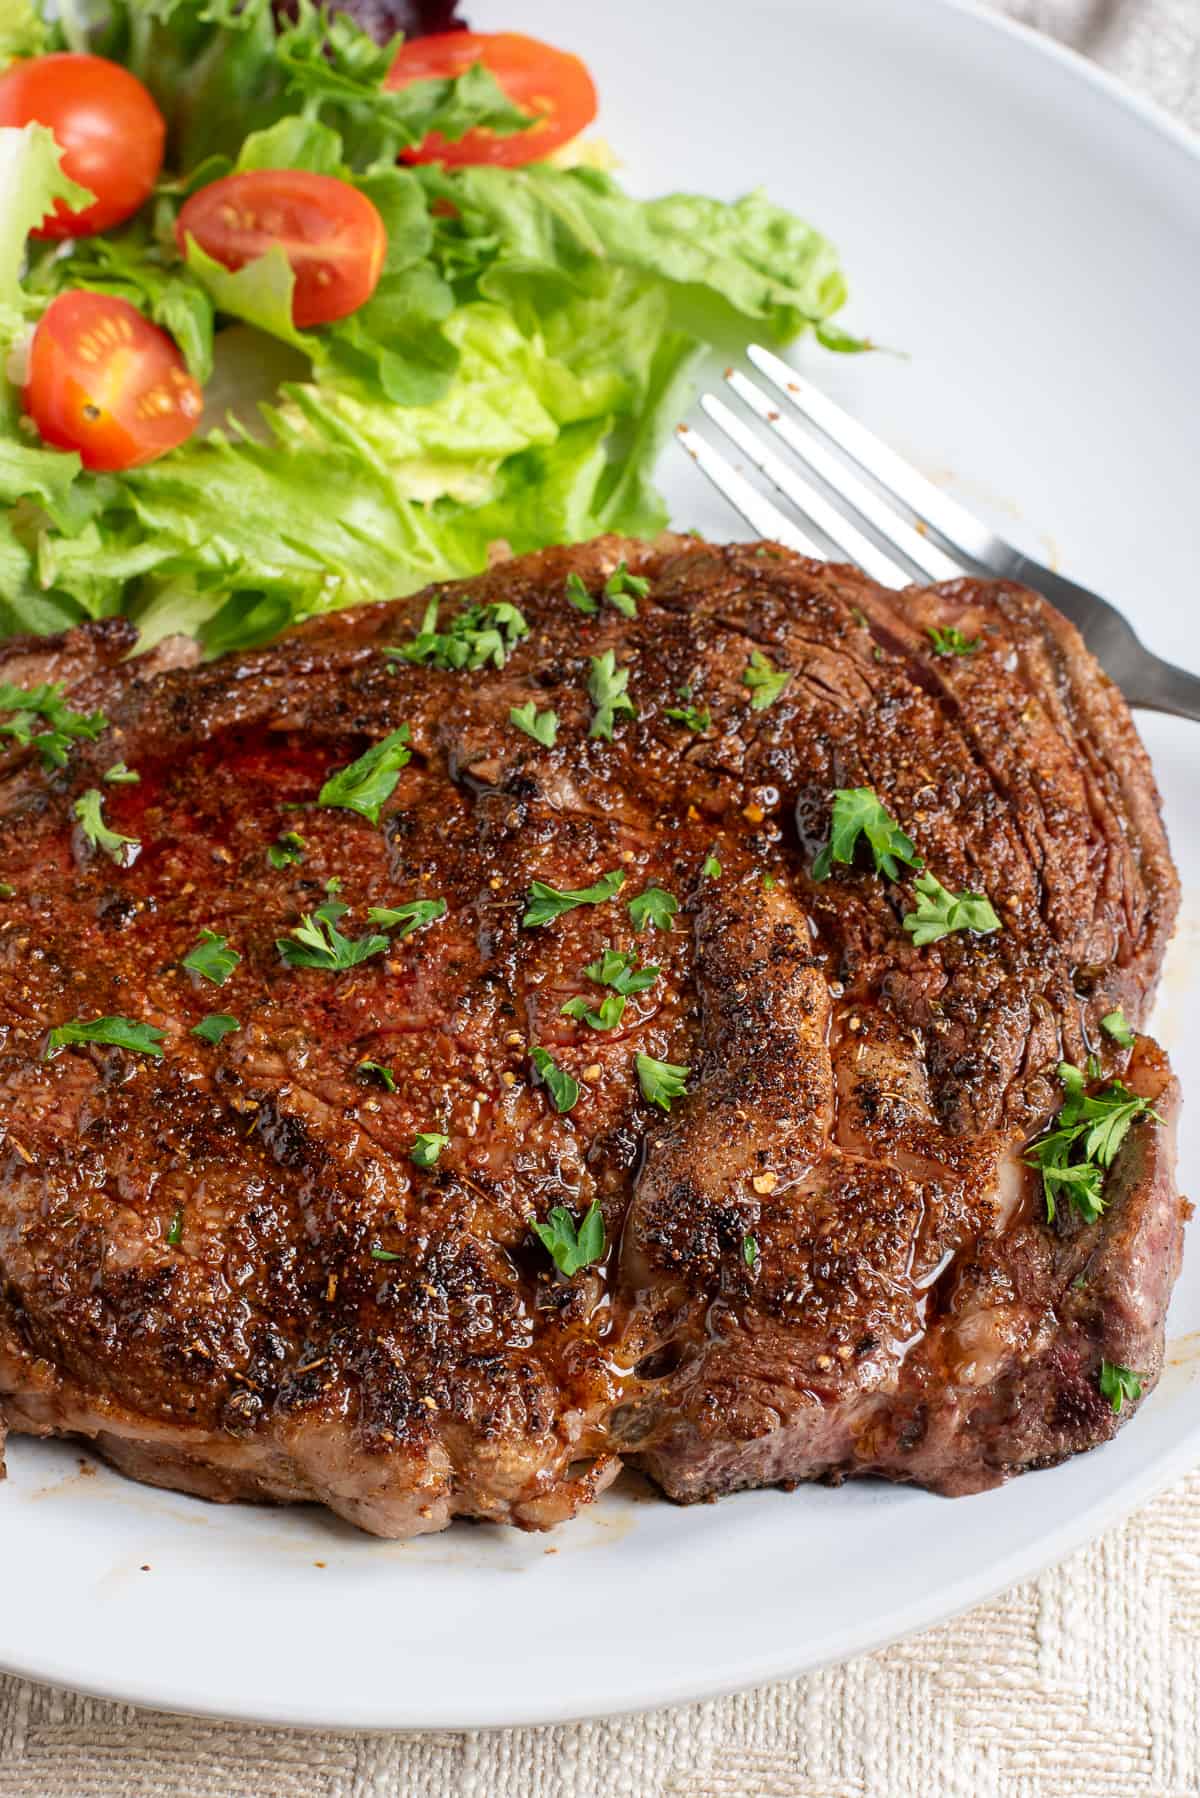 blackened ribeye steak with salad. 